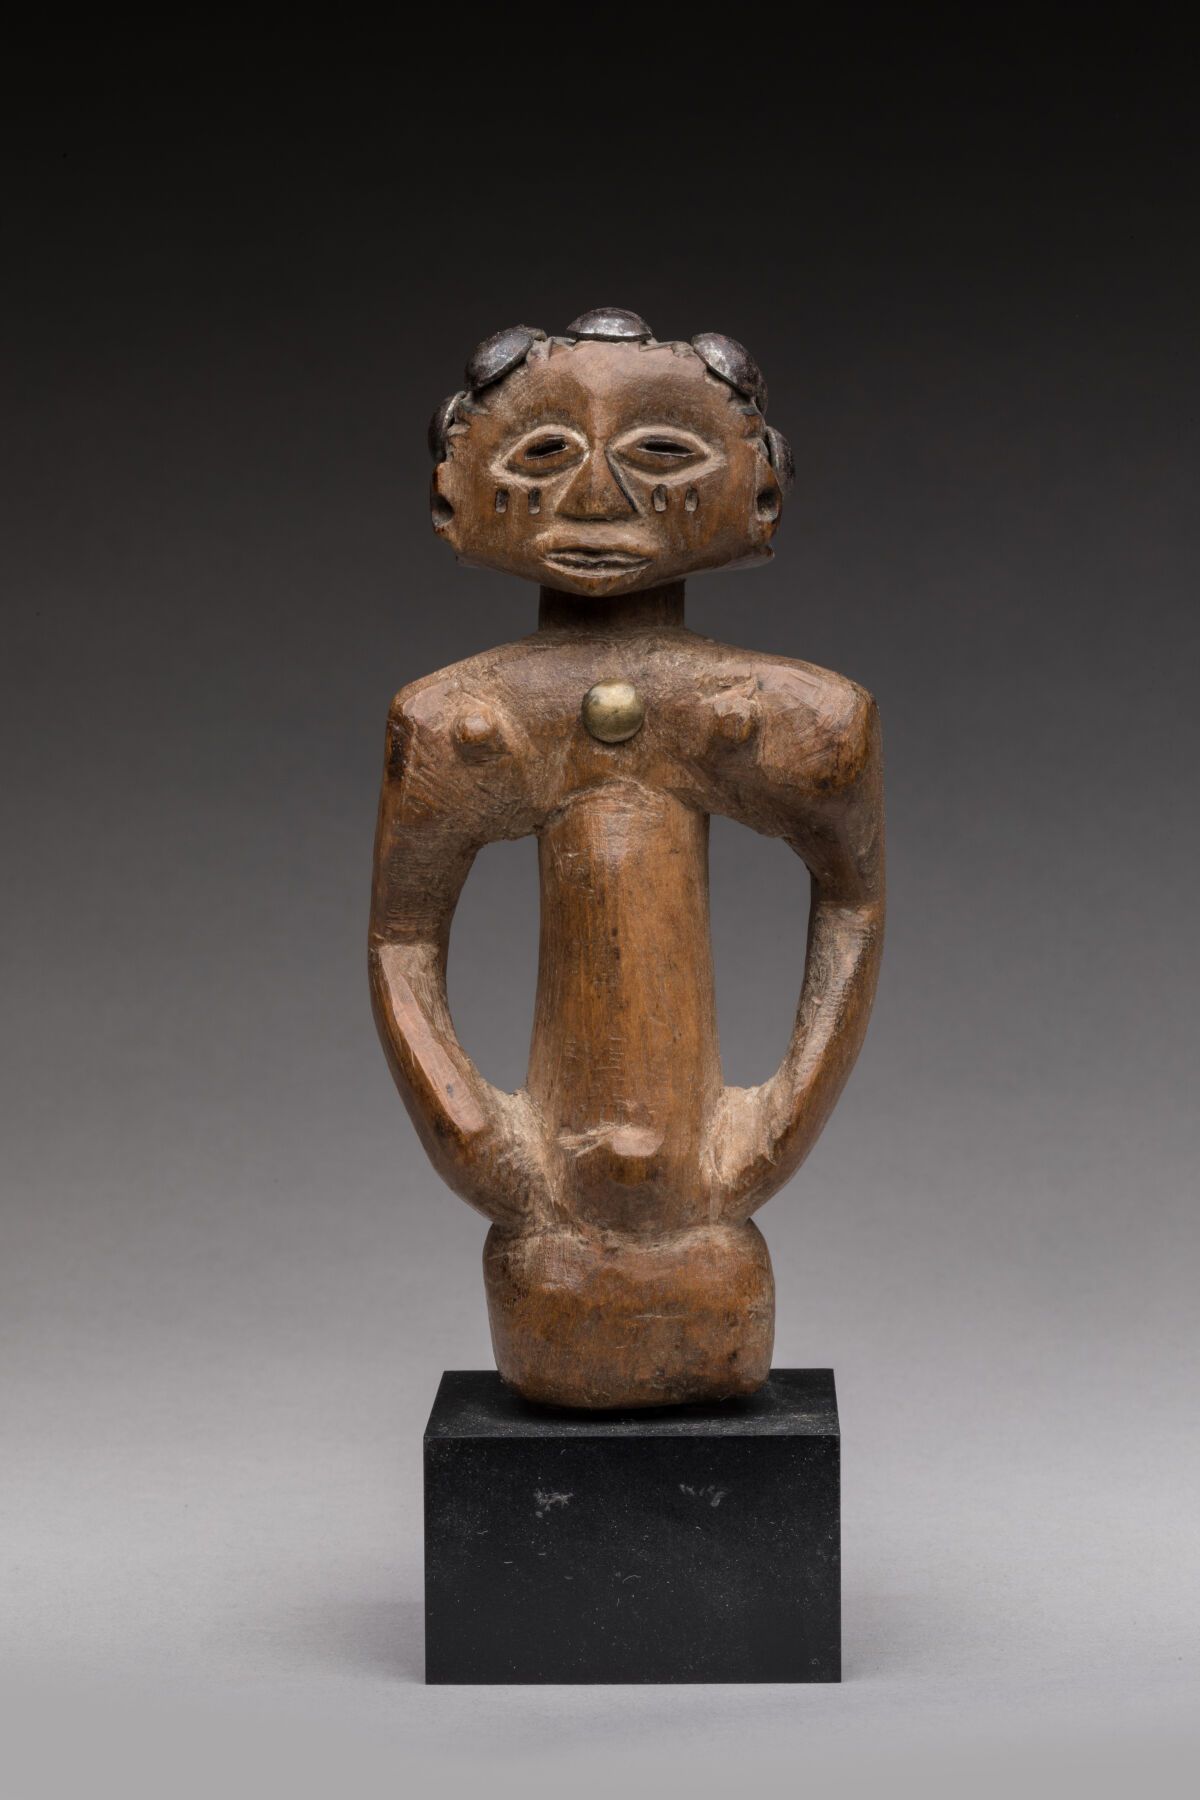 Null LUBA，刚果民主共和国。
木头，自然风化，装饰用钉子。
女性半身雕像，臀部，头饰由金属钉制成。
高度：13厘米。